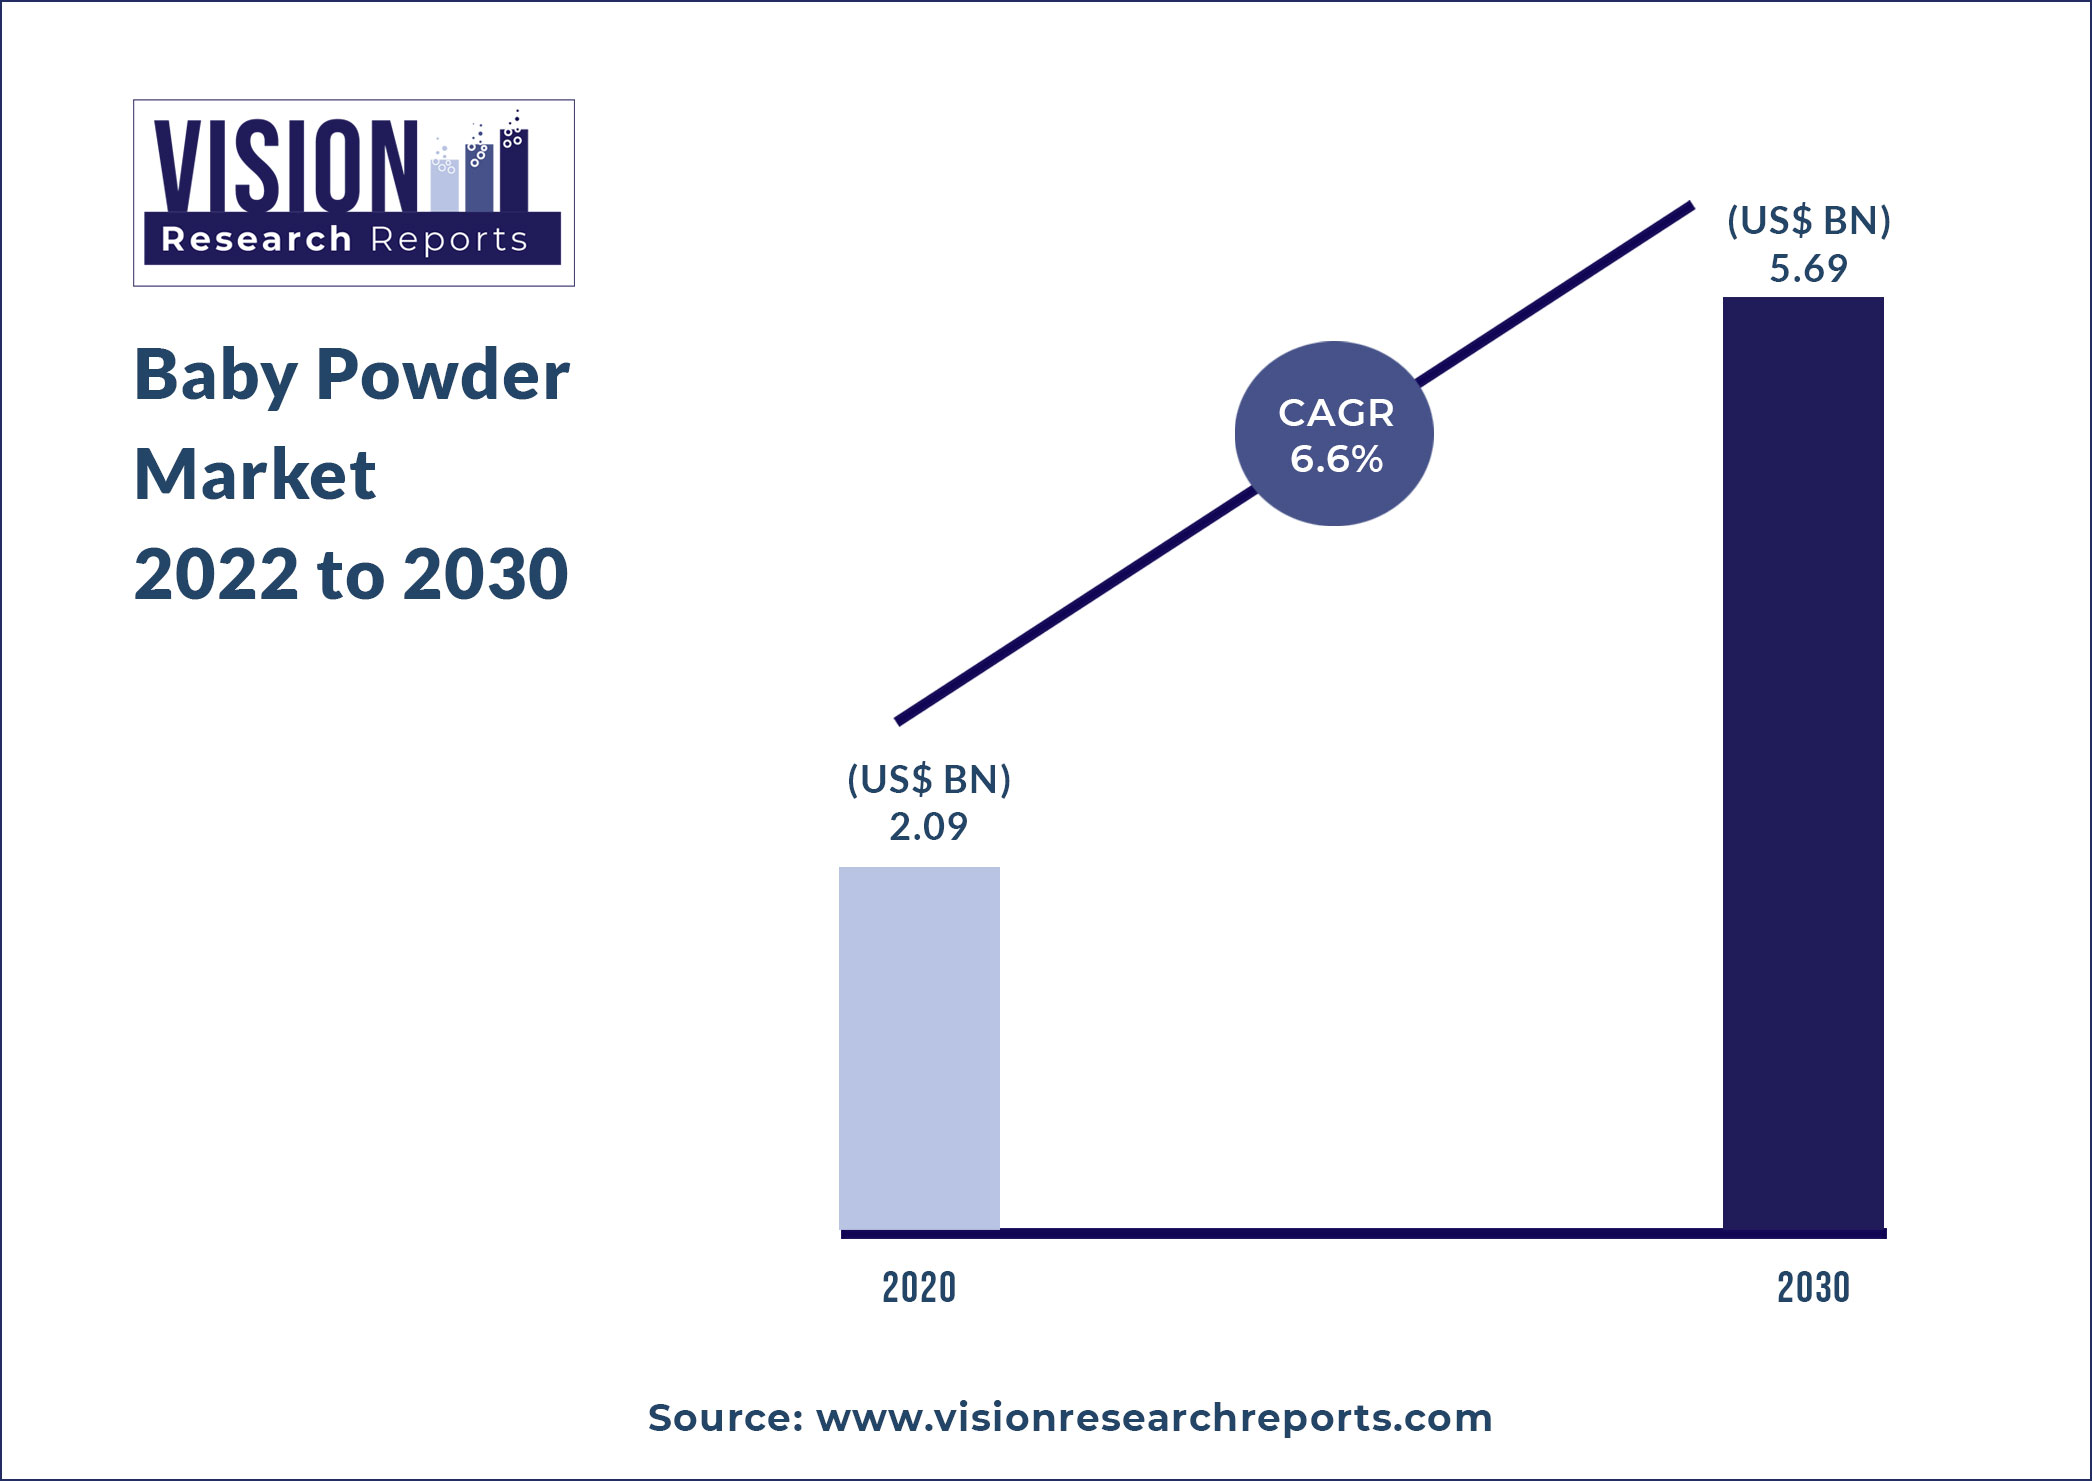 Baby Powder Market Size 2022 to 2030